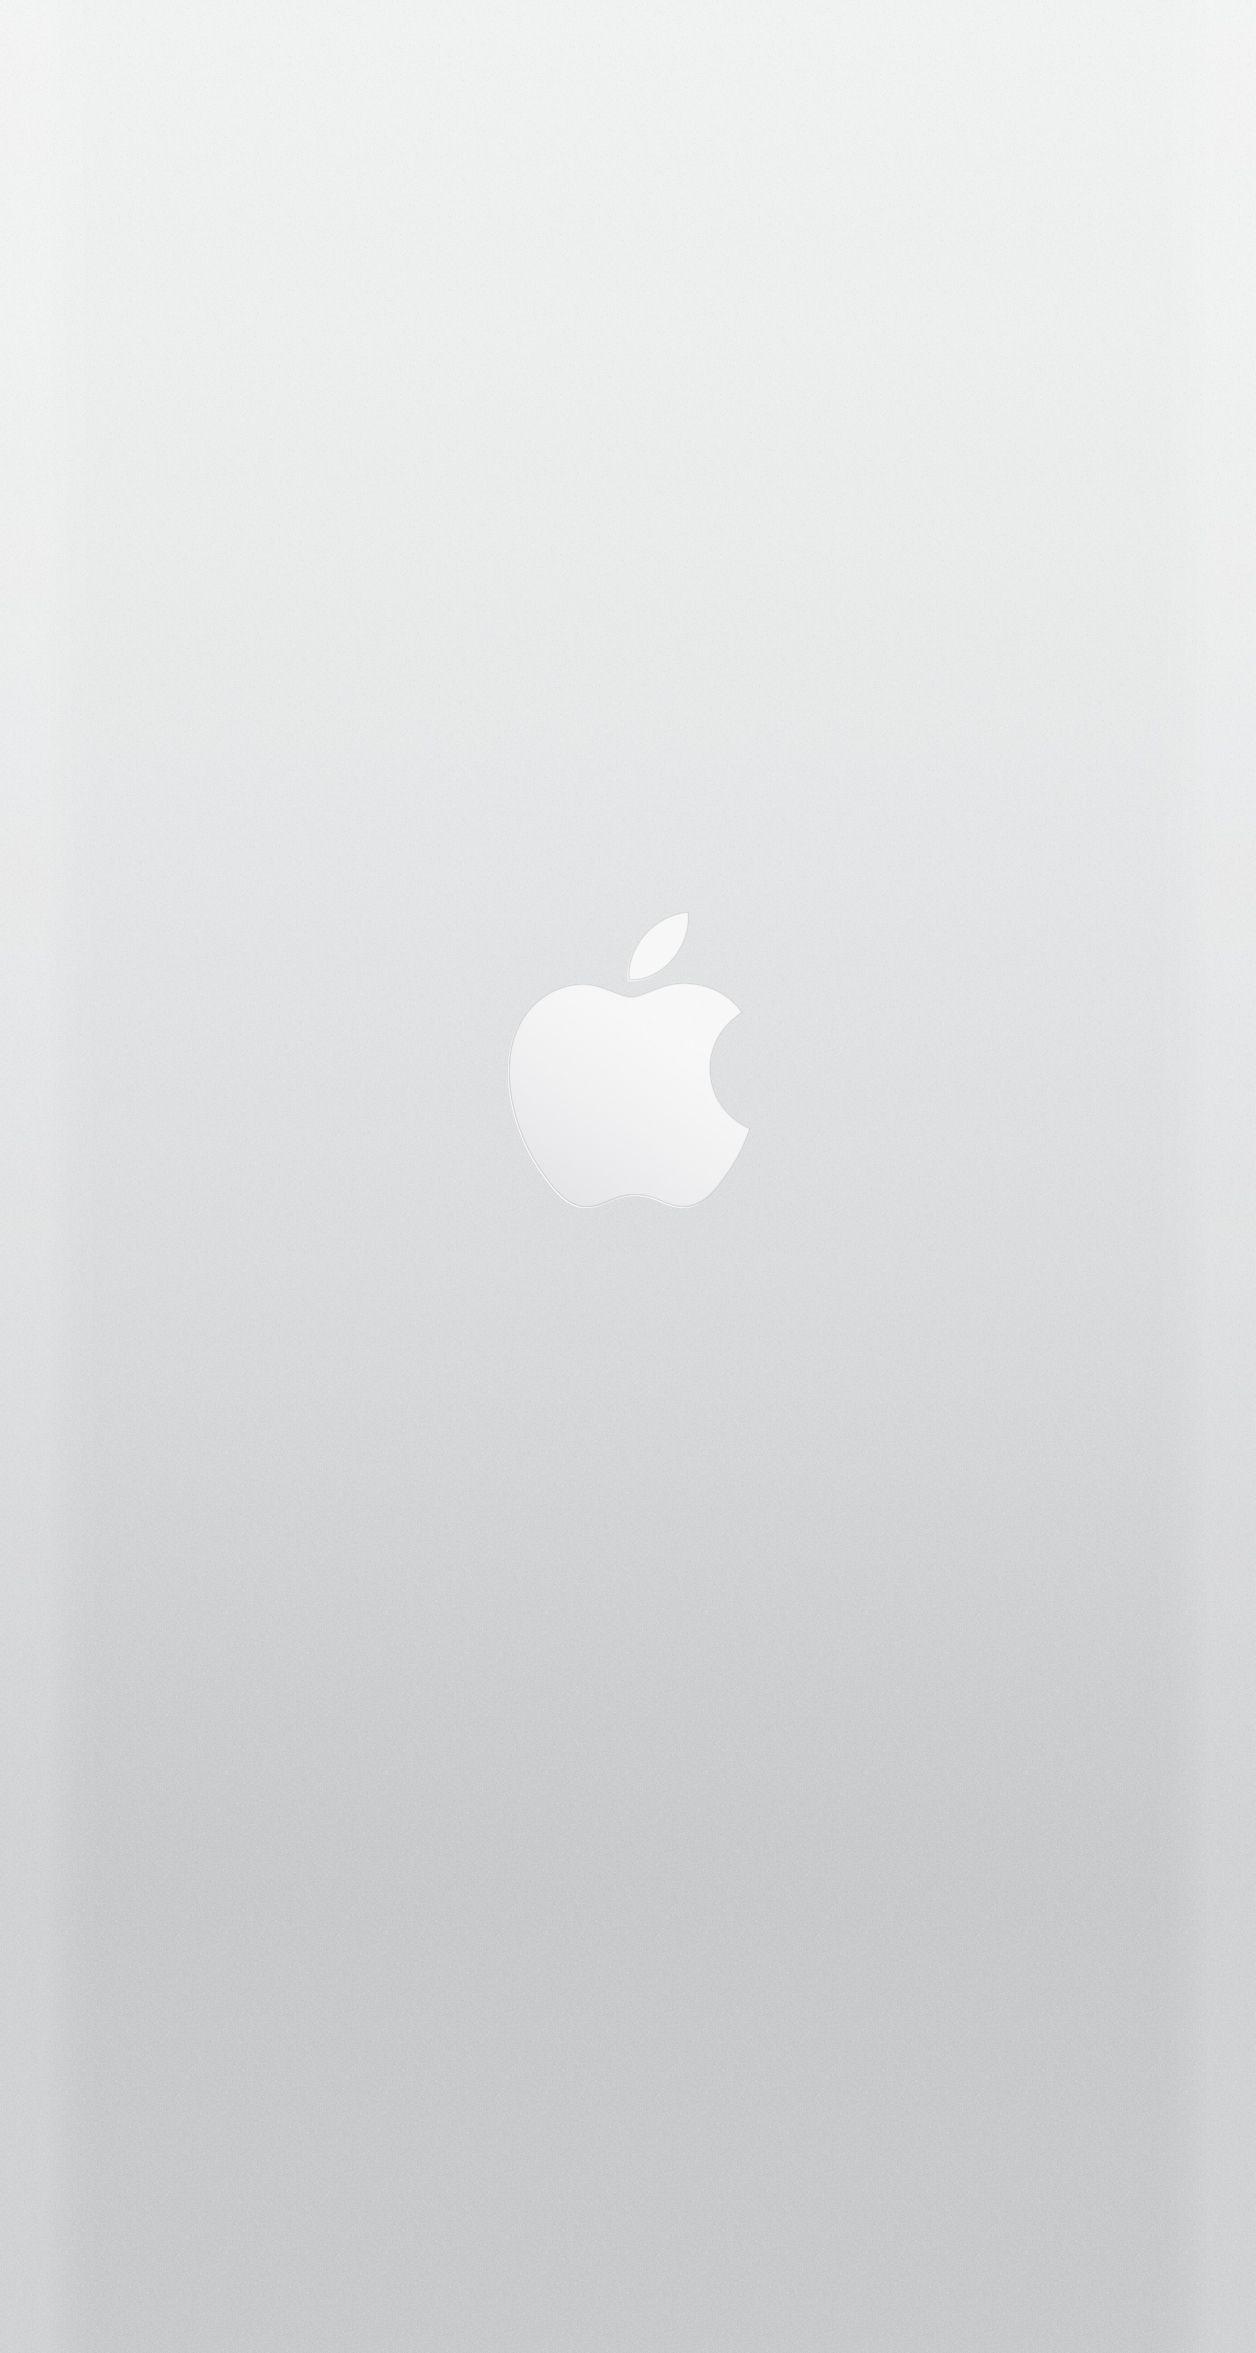 White Apple iPhone Logo - Apple logo wallpaper for iPhone 6